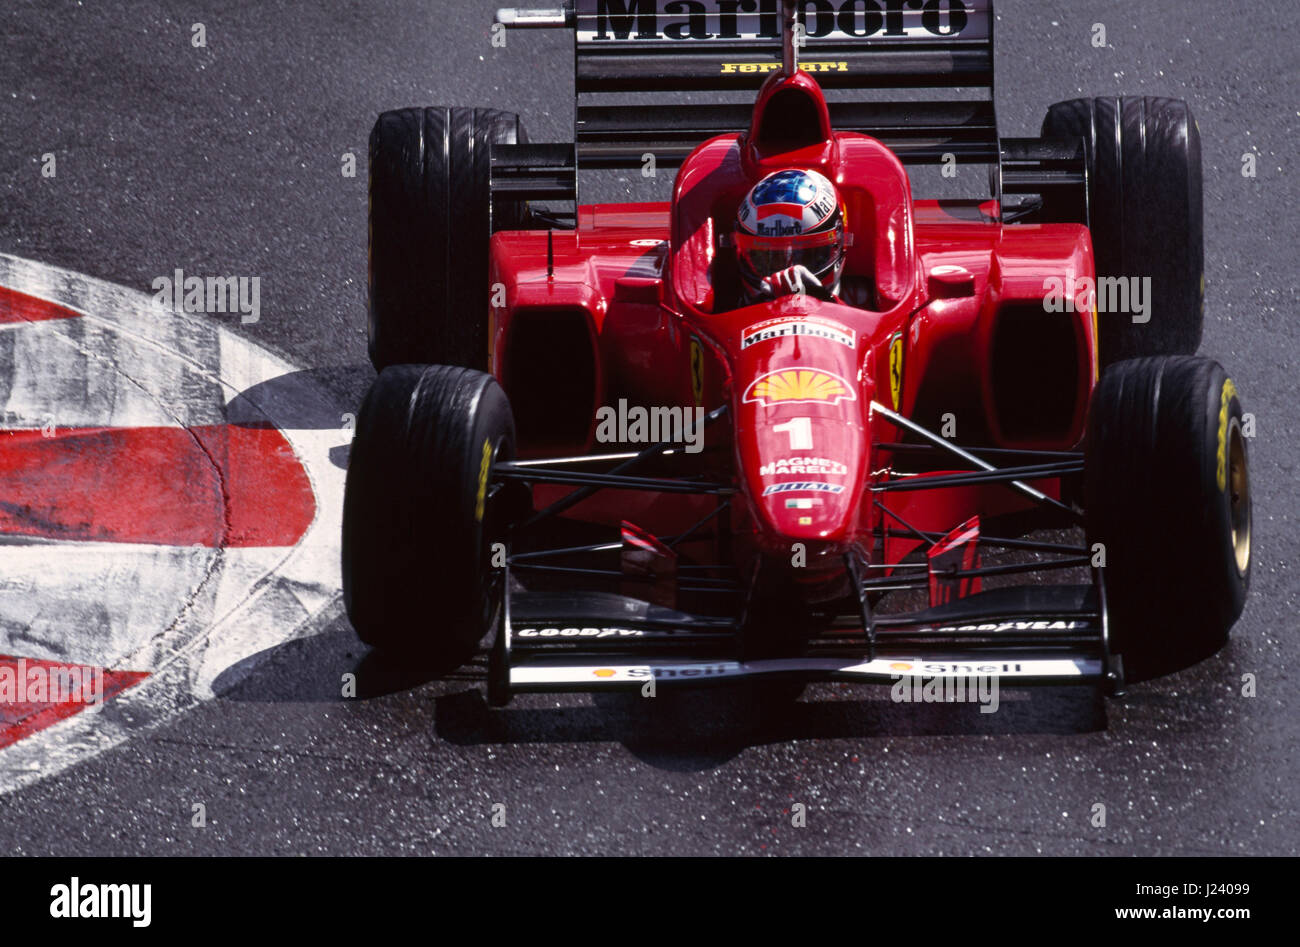 F1, Ferrari, Michael Schumacher, Monaco GP 1995 Foto de stock